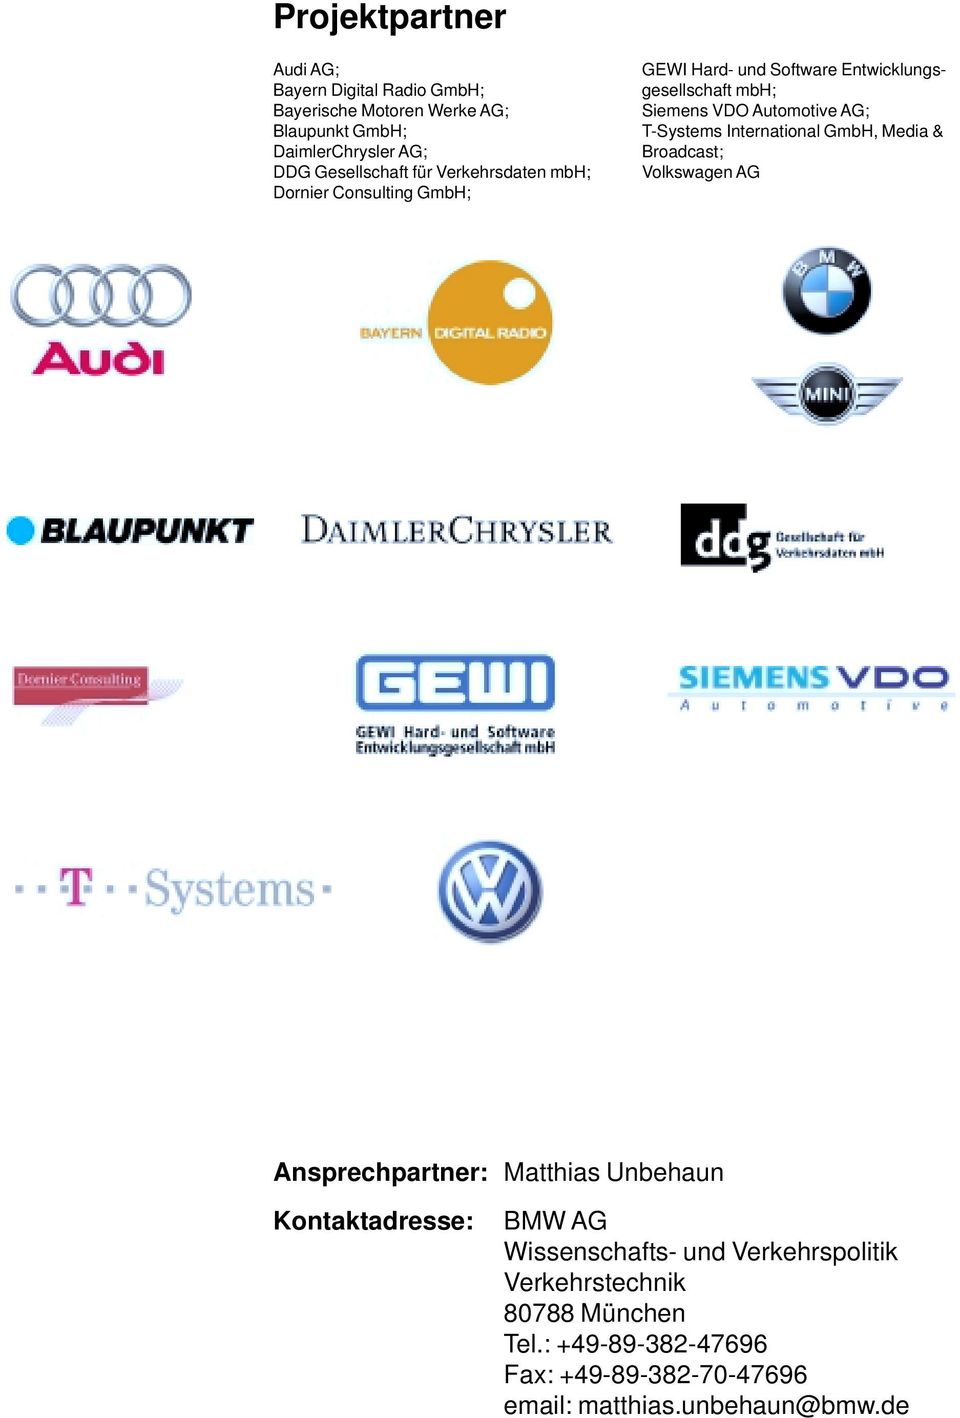 Automotive AG; T-Systems International GmbH, Media & Broadcast; Volkswagen AG Ansprechpartner: Matthias Unbehaun Kontaktadresse: